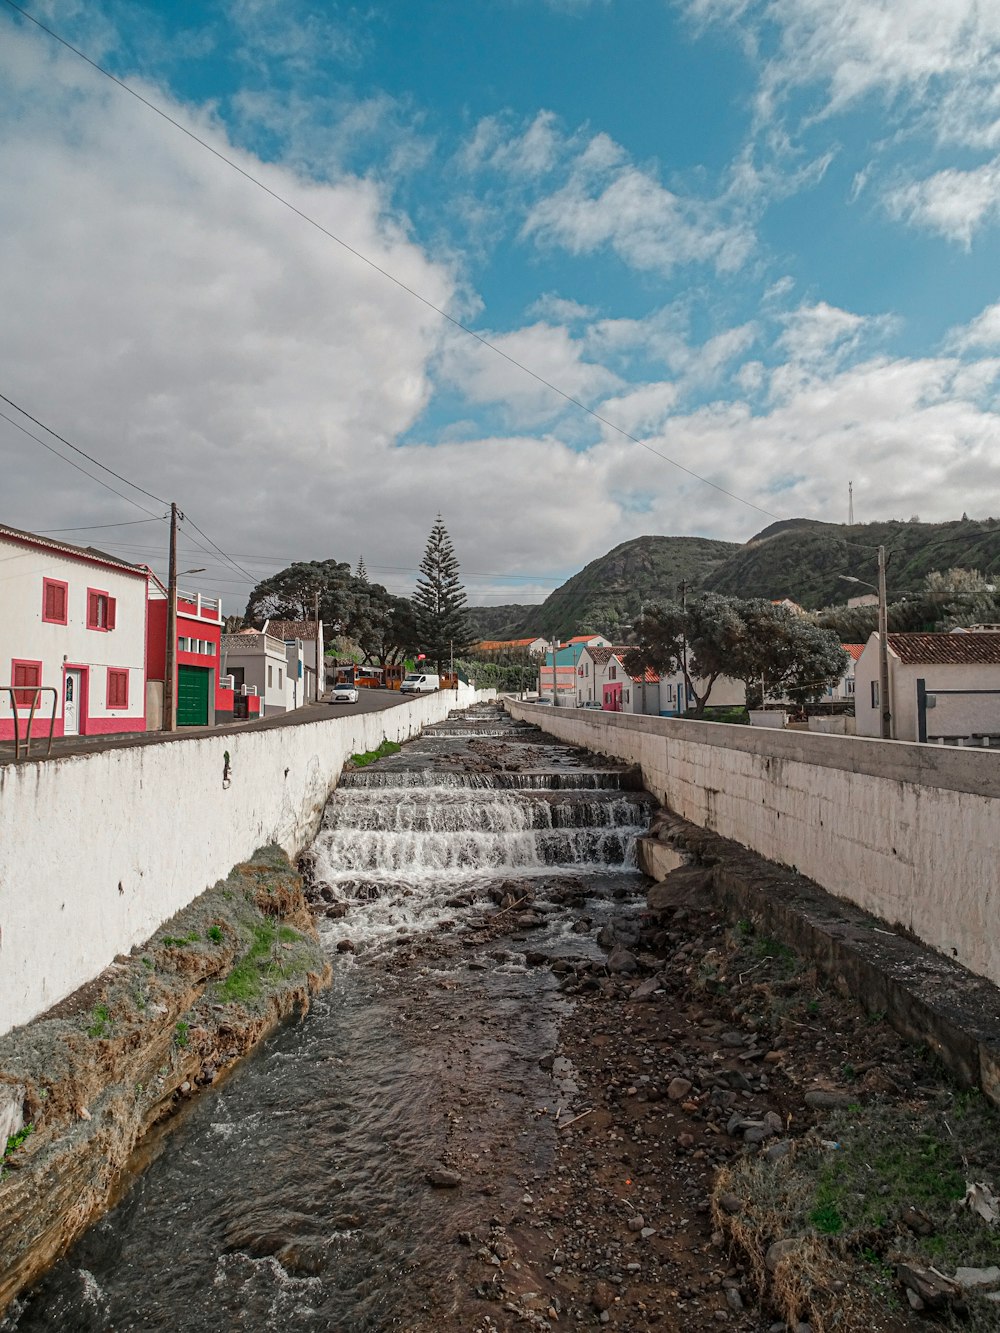 a small stream running through a small town